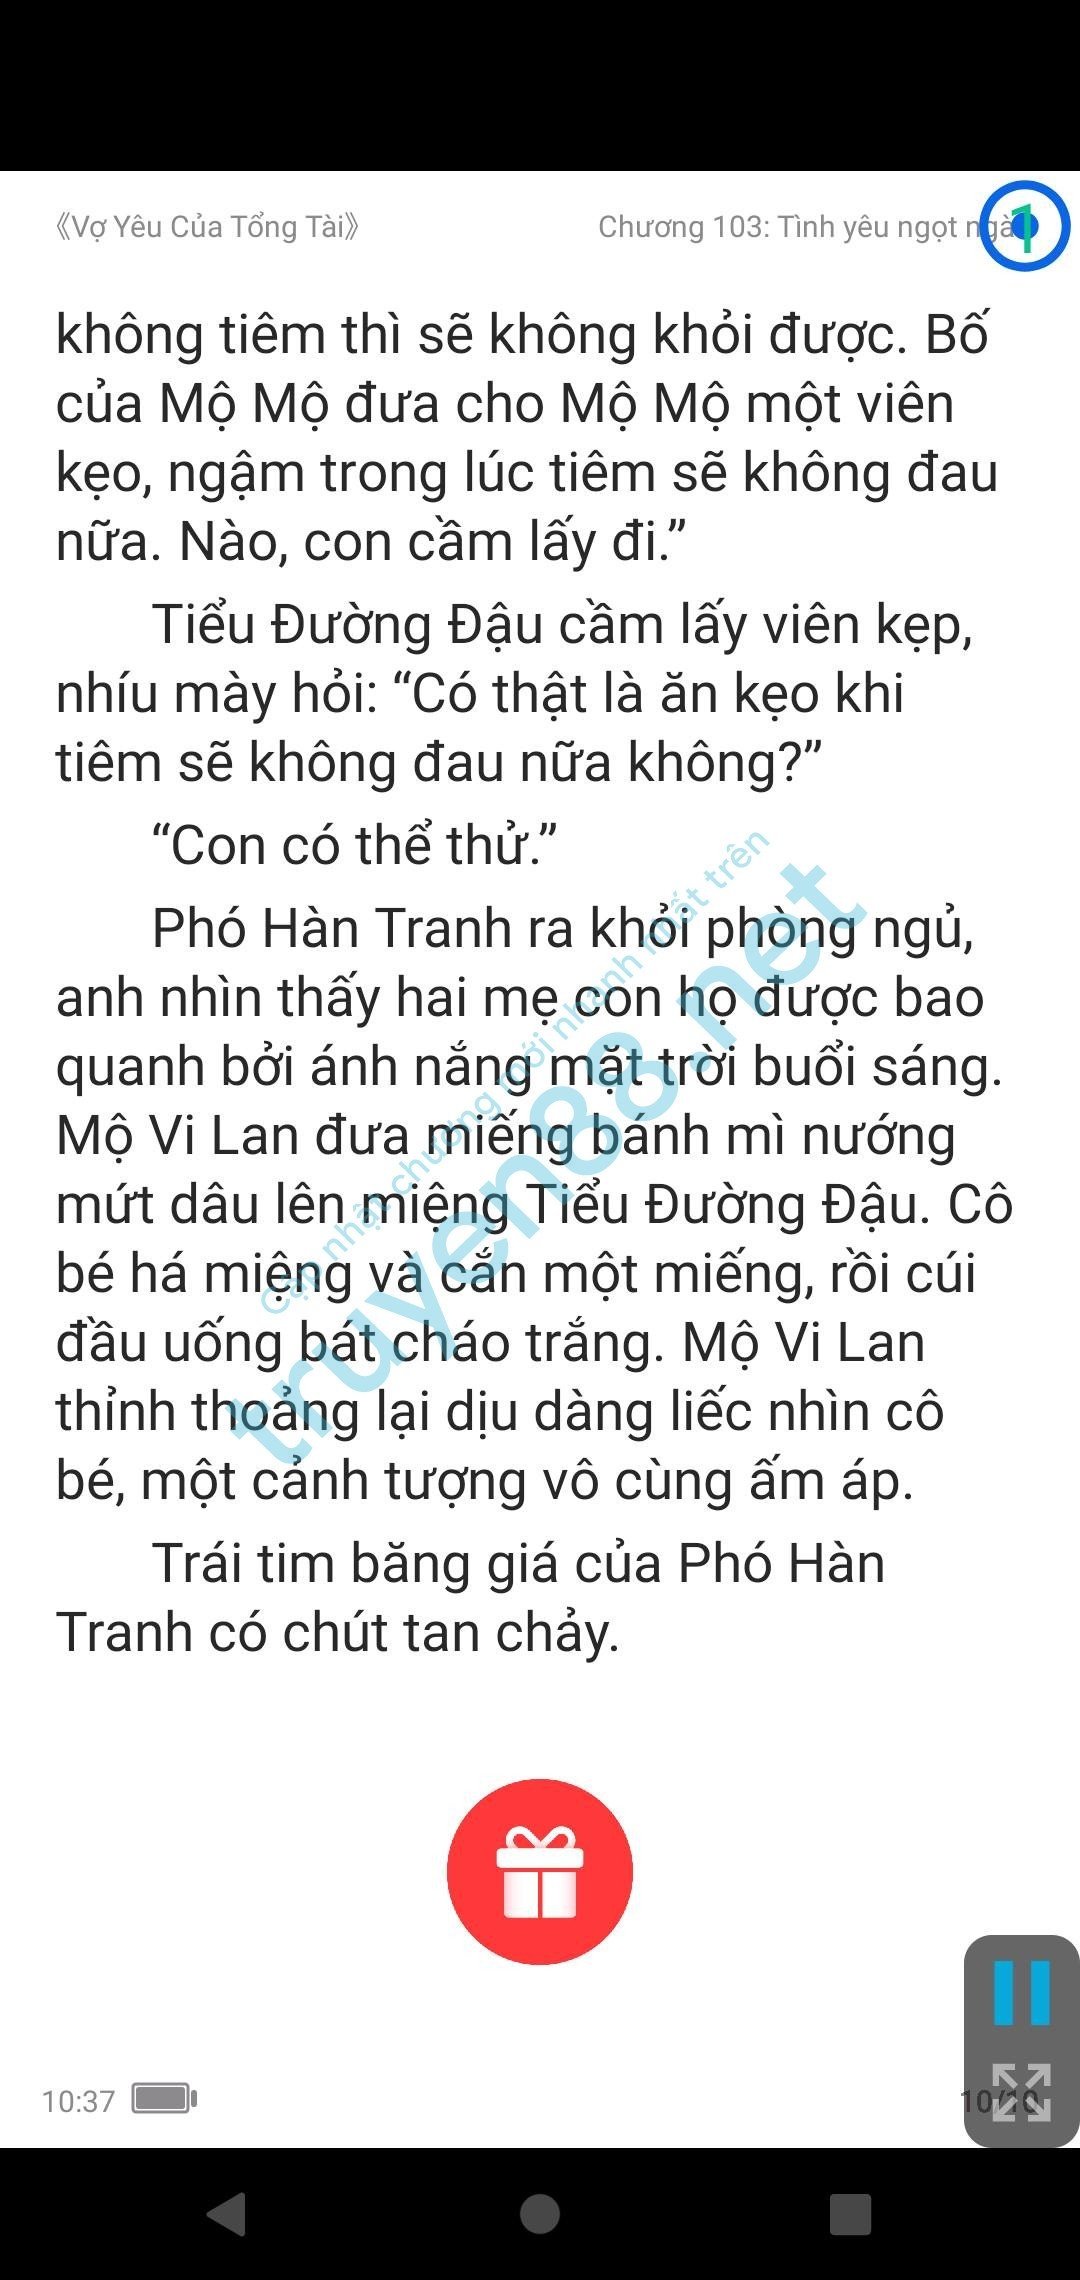 vo-yeu-cua-tong-tai-mo-vi-lan--pho-han-tranh-103-2